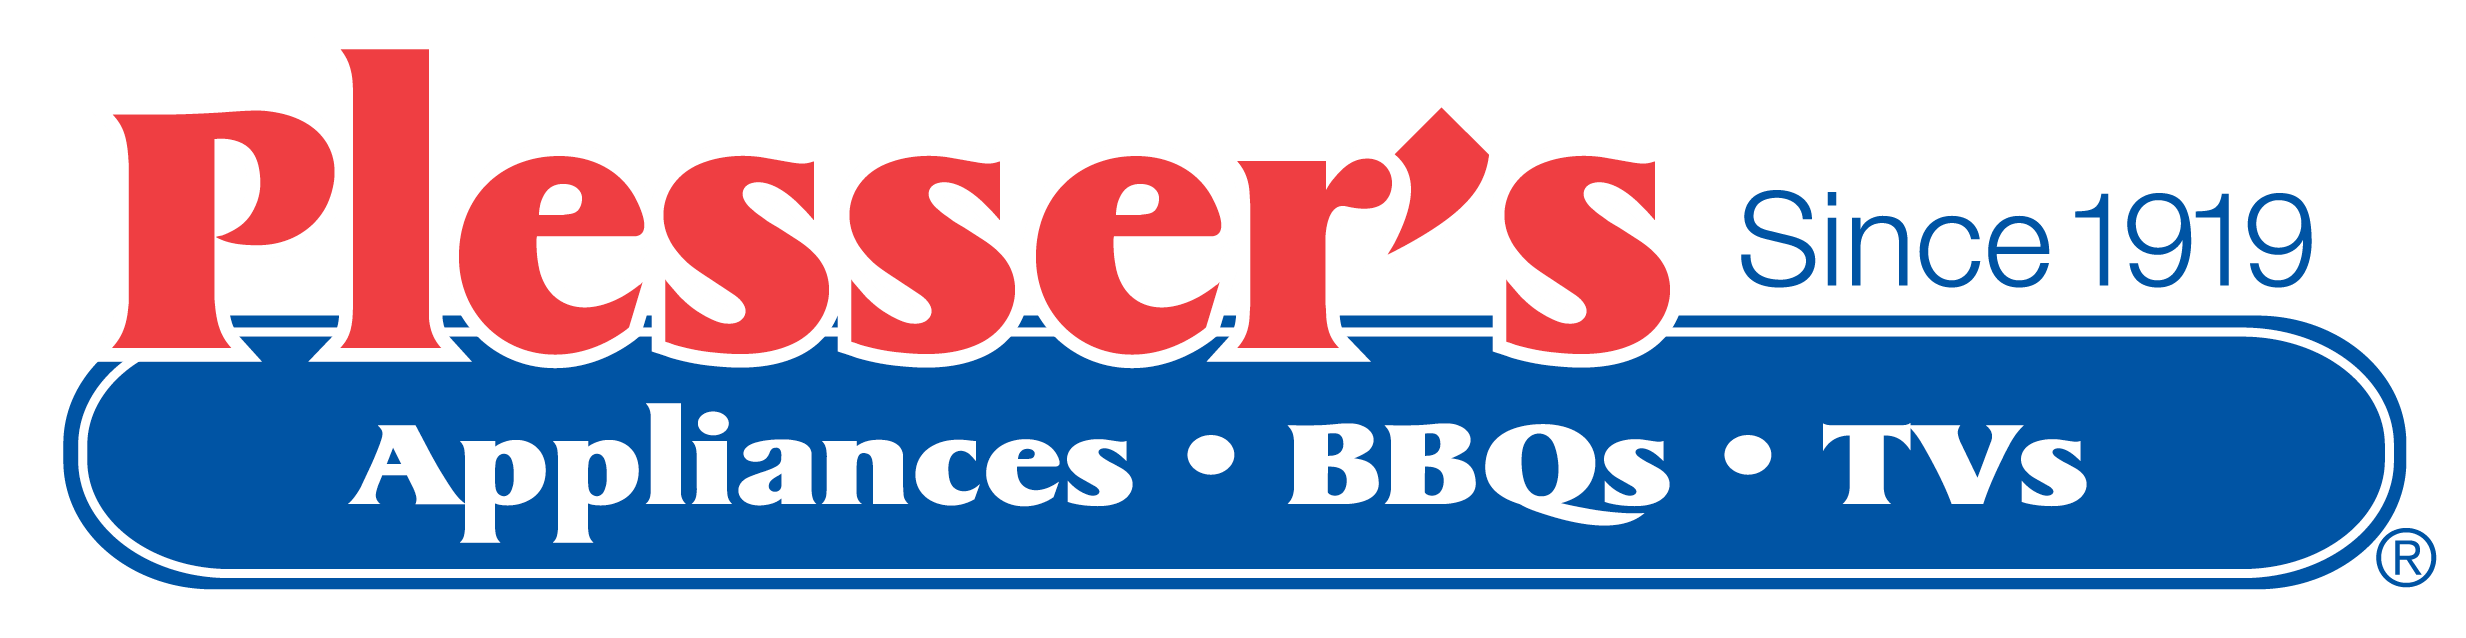 MSH Inc. dba Plesser's Appliances Company Logo